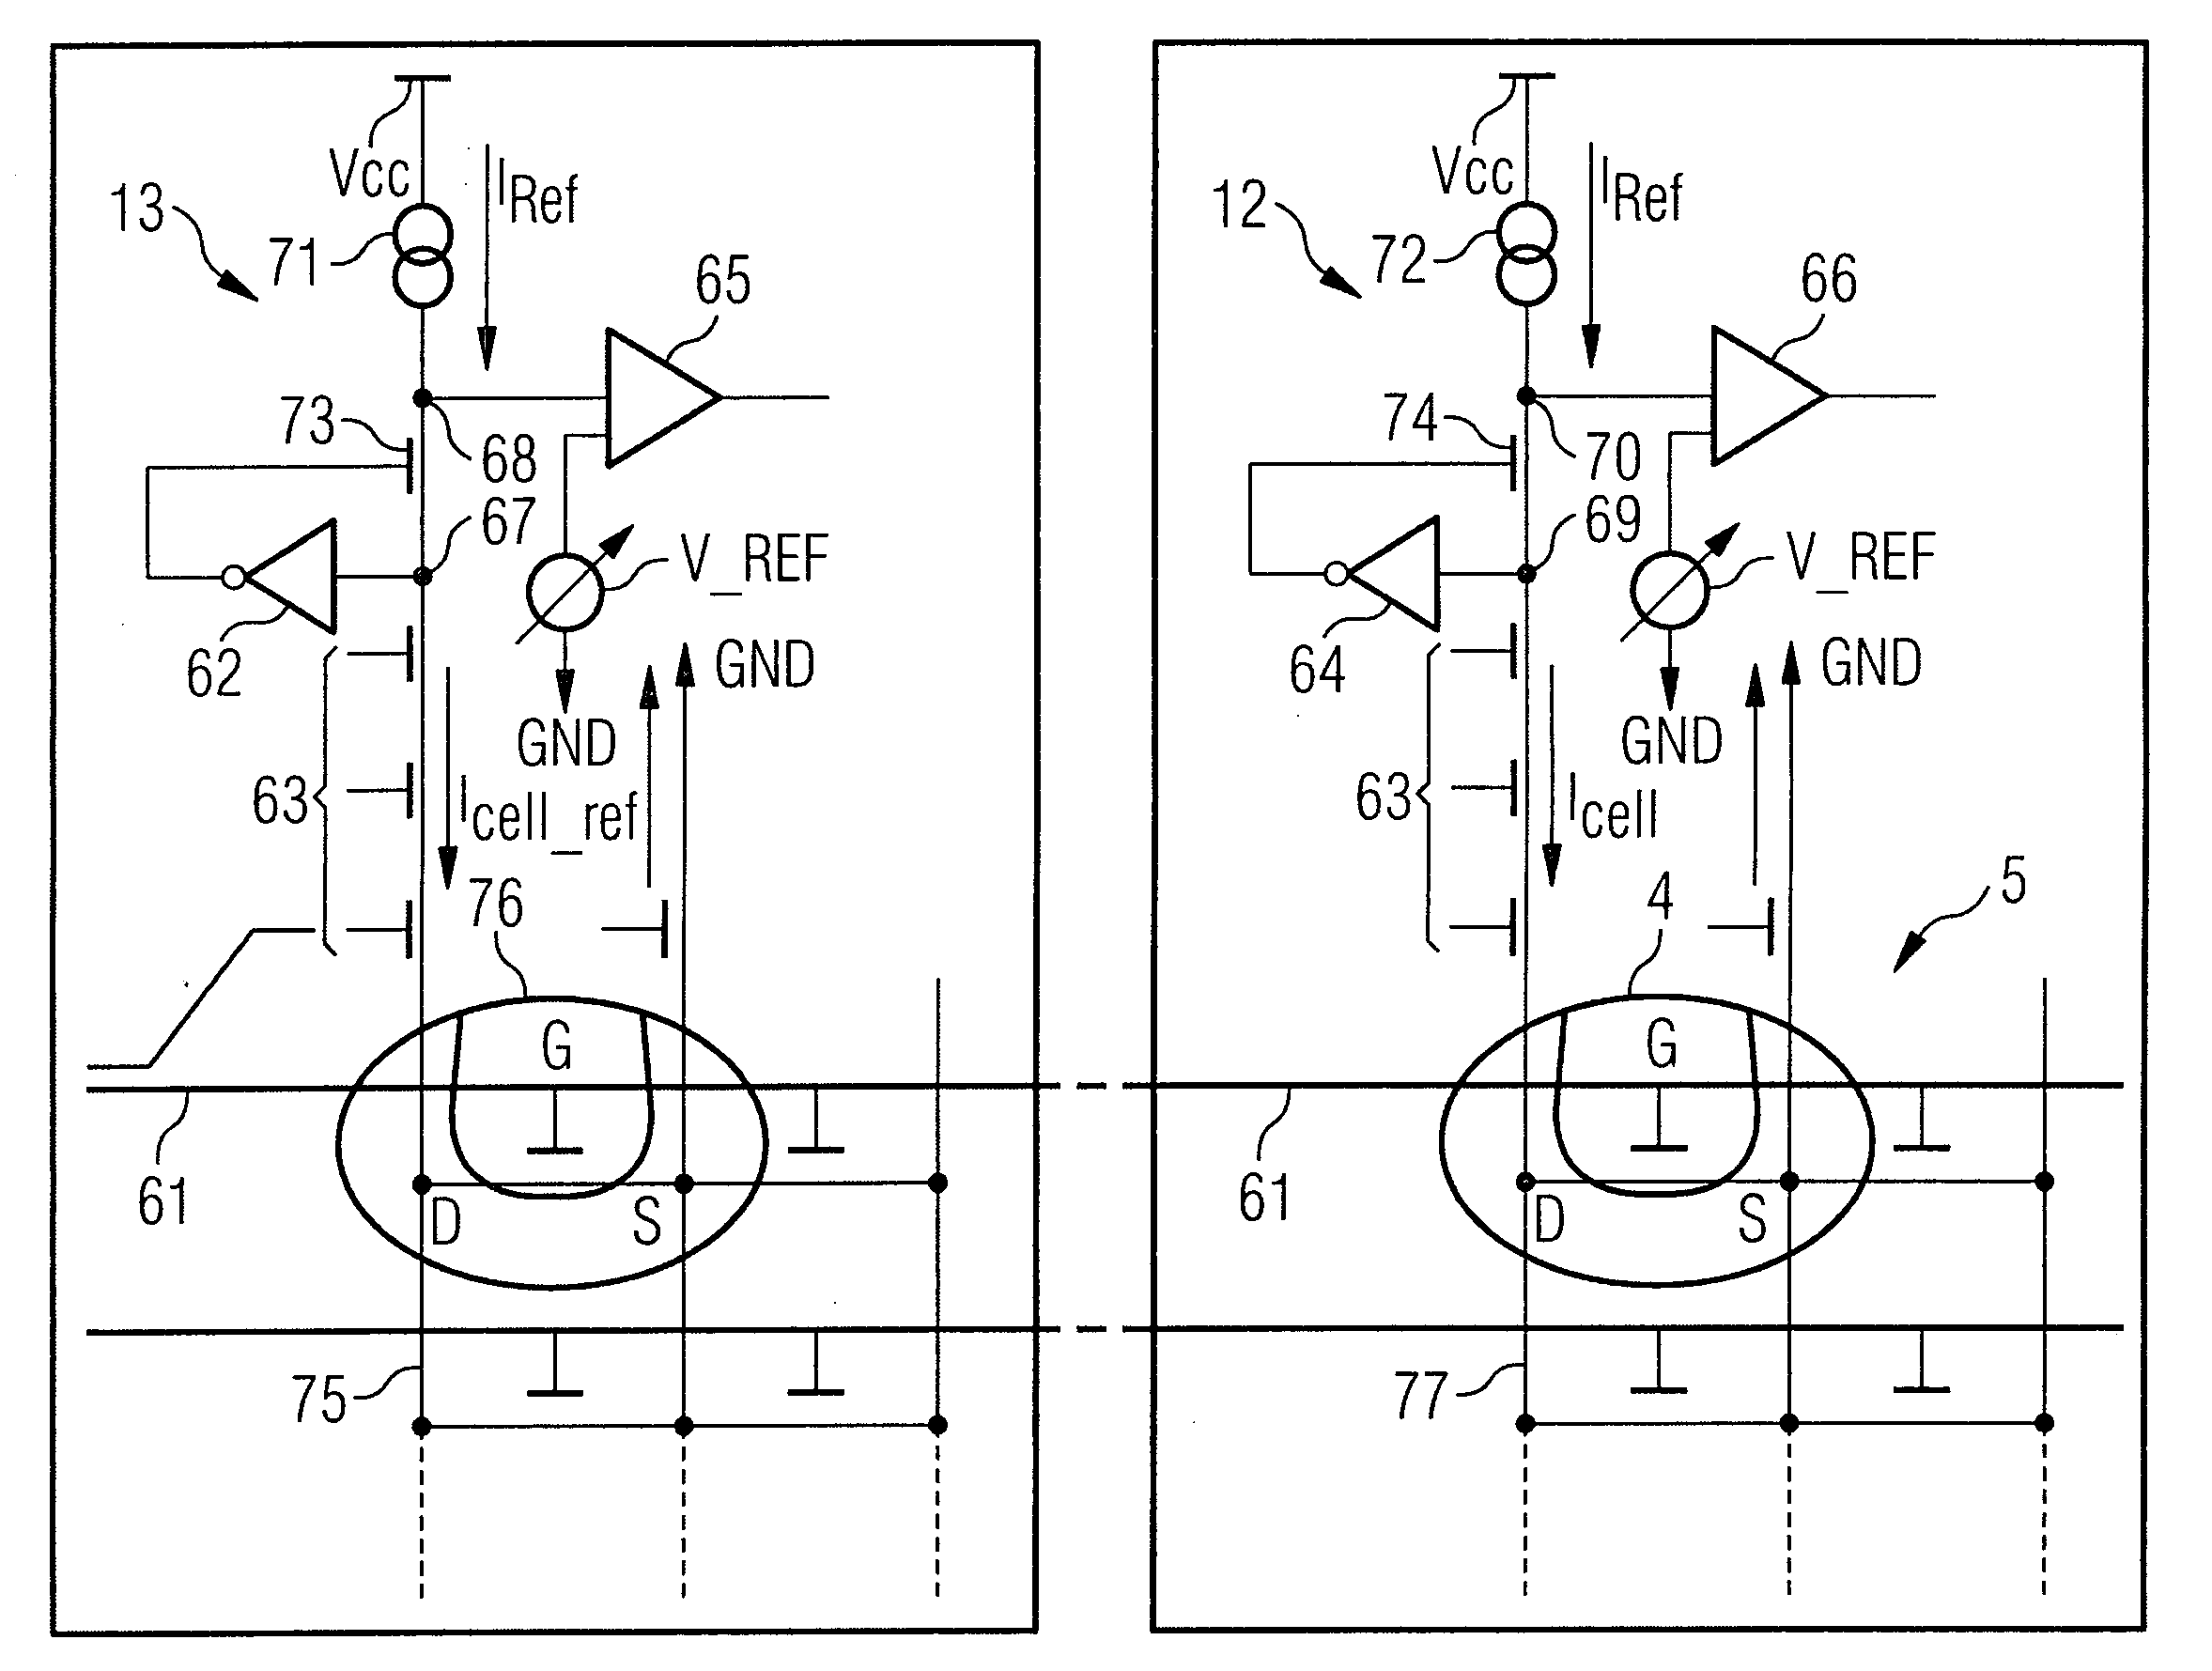 Reference scheme for a non-volatile semiconductor memory device